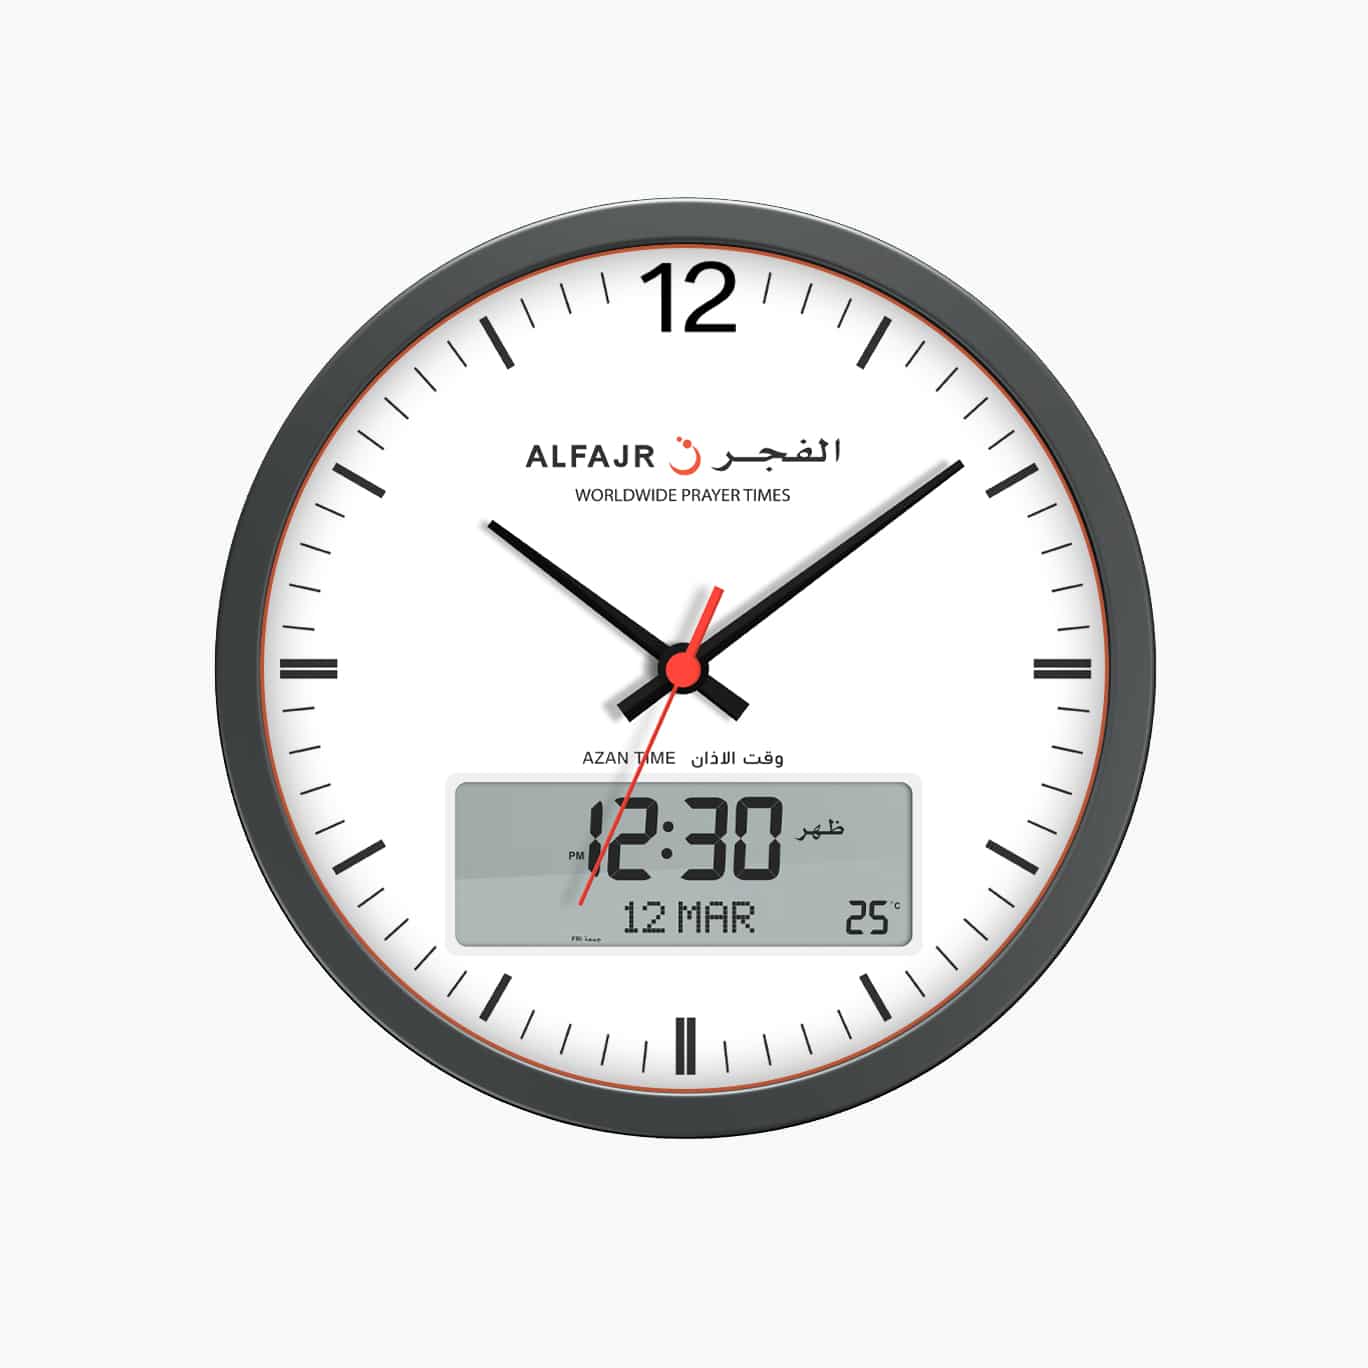 Details about   Alfajr Large Round Wall Ana-Digi Automatic Azan Prayer Clock Qibla Muslim CR-23 